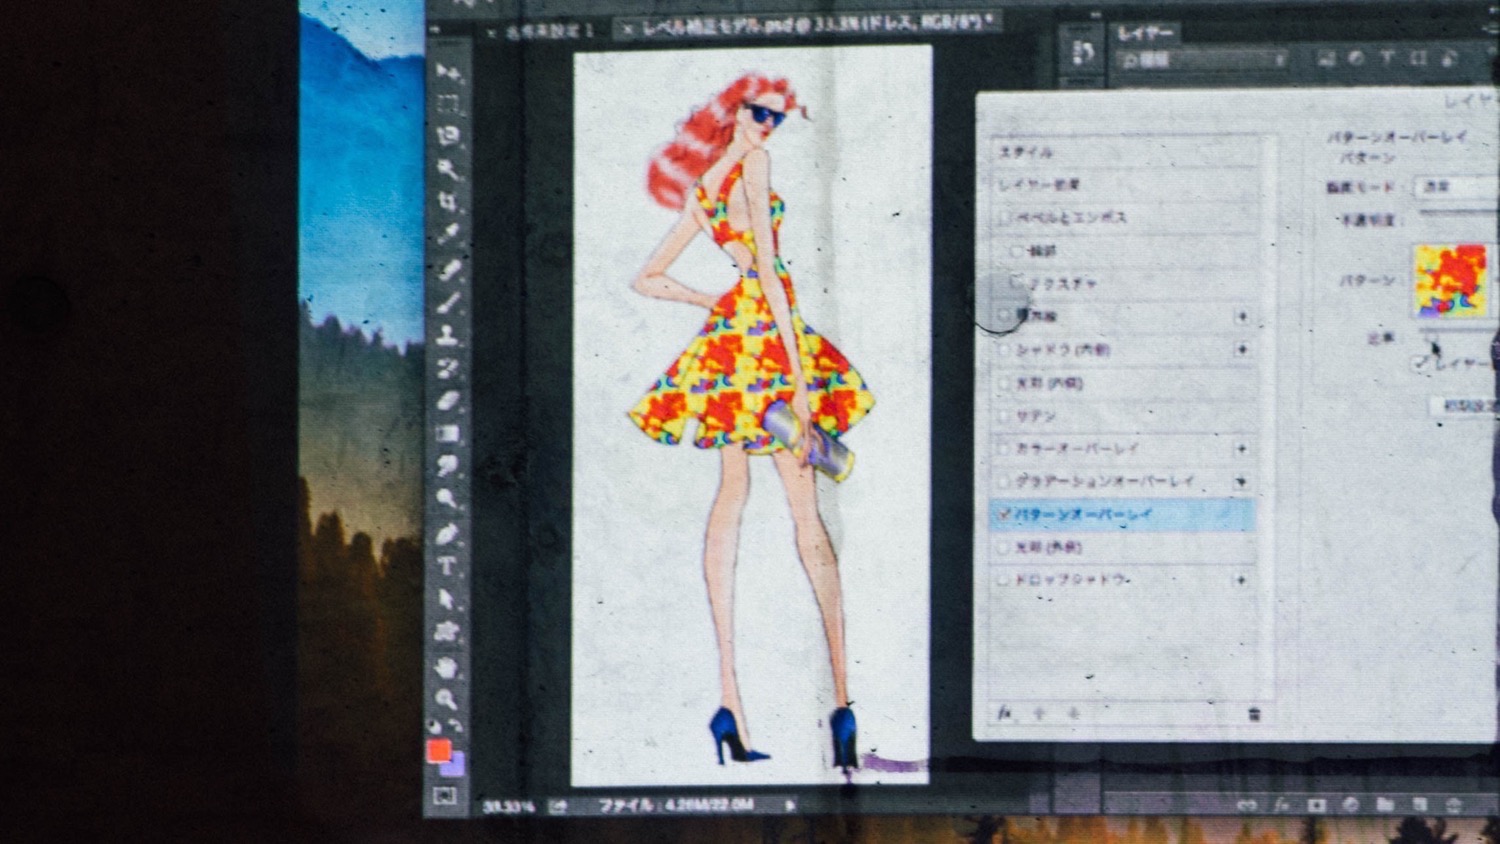 Tokyo fashion technology lab report 1 62